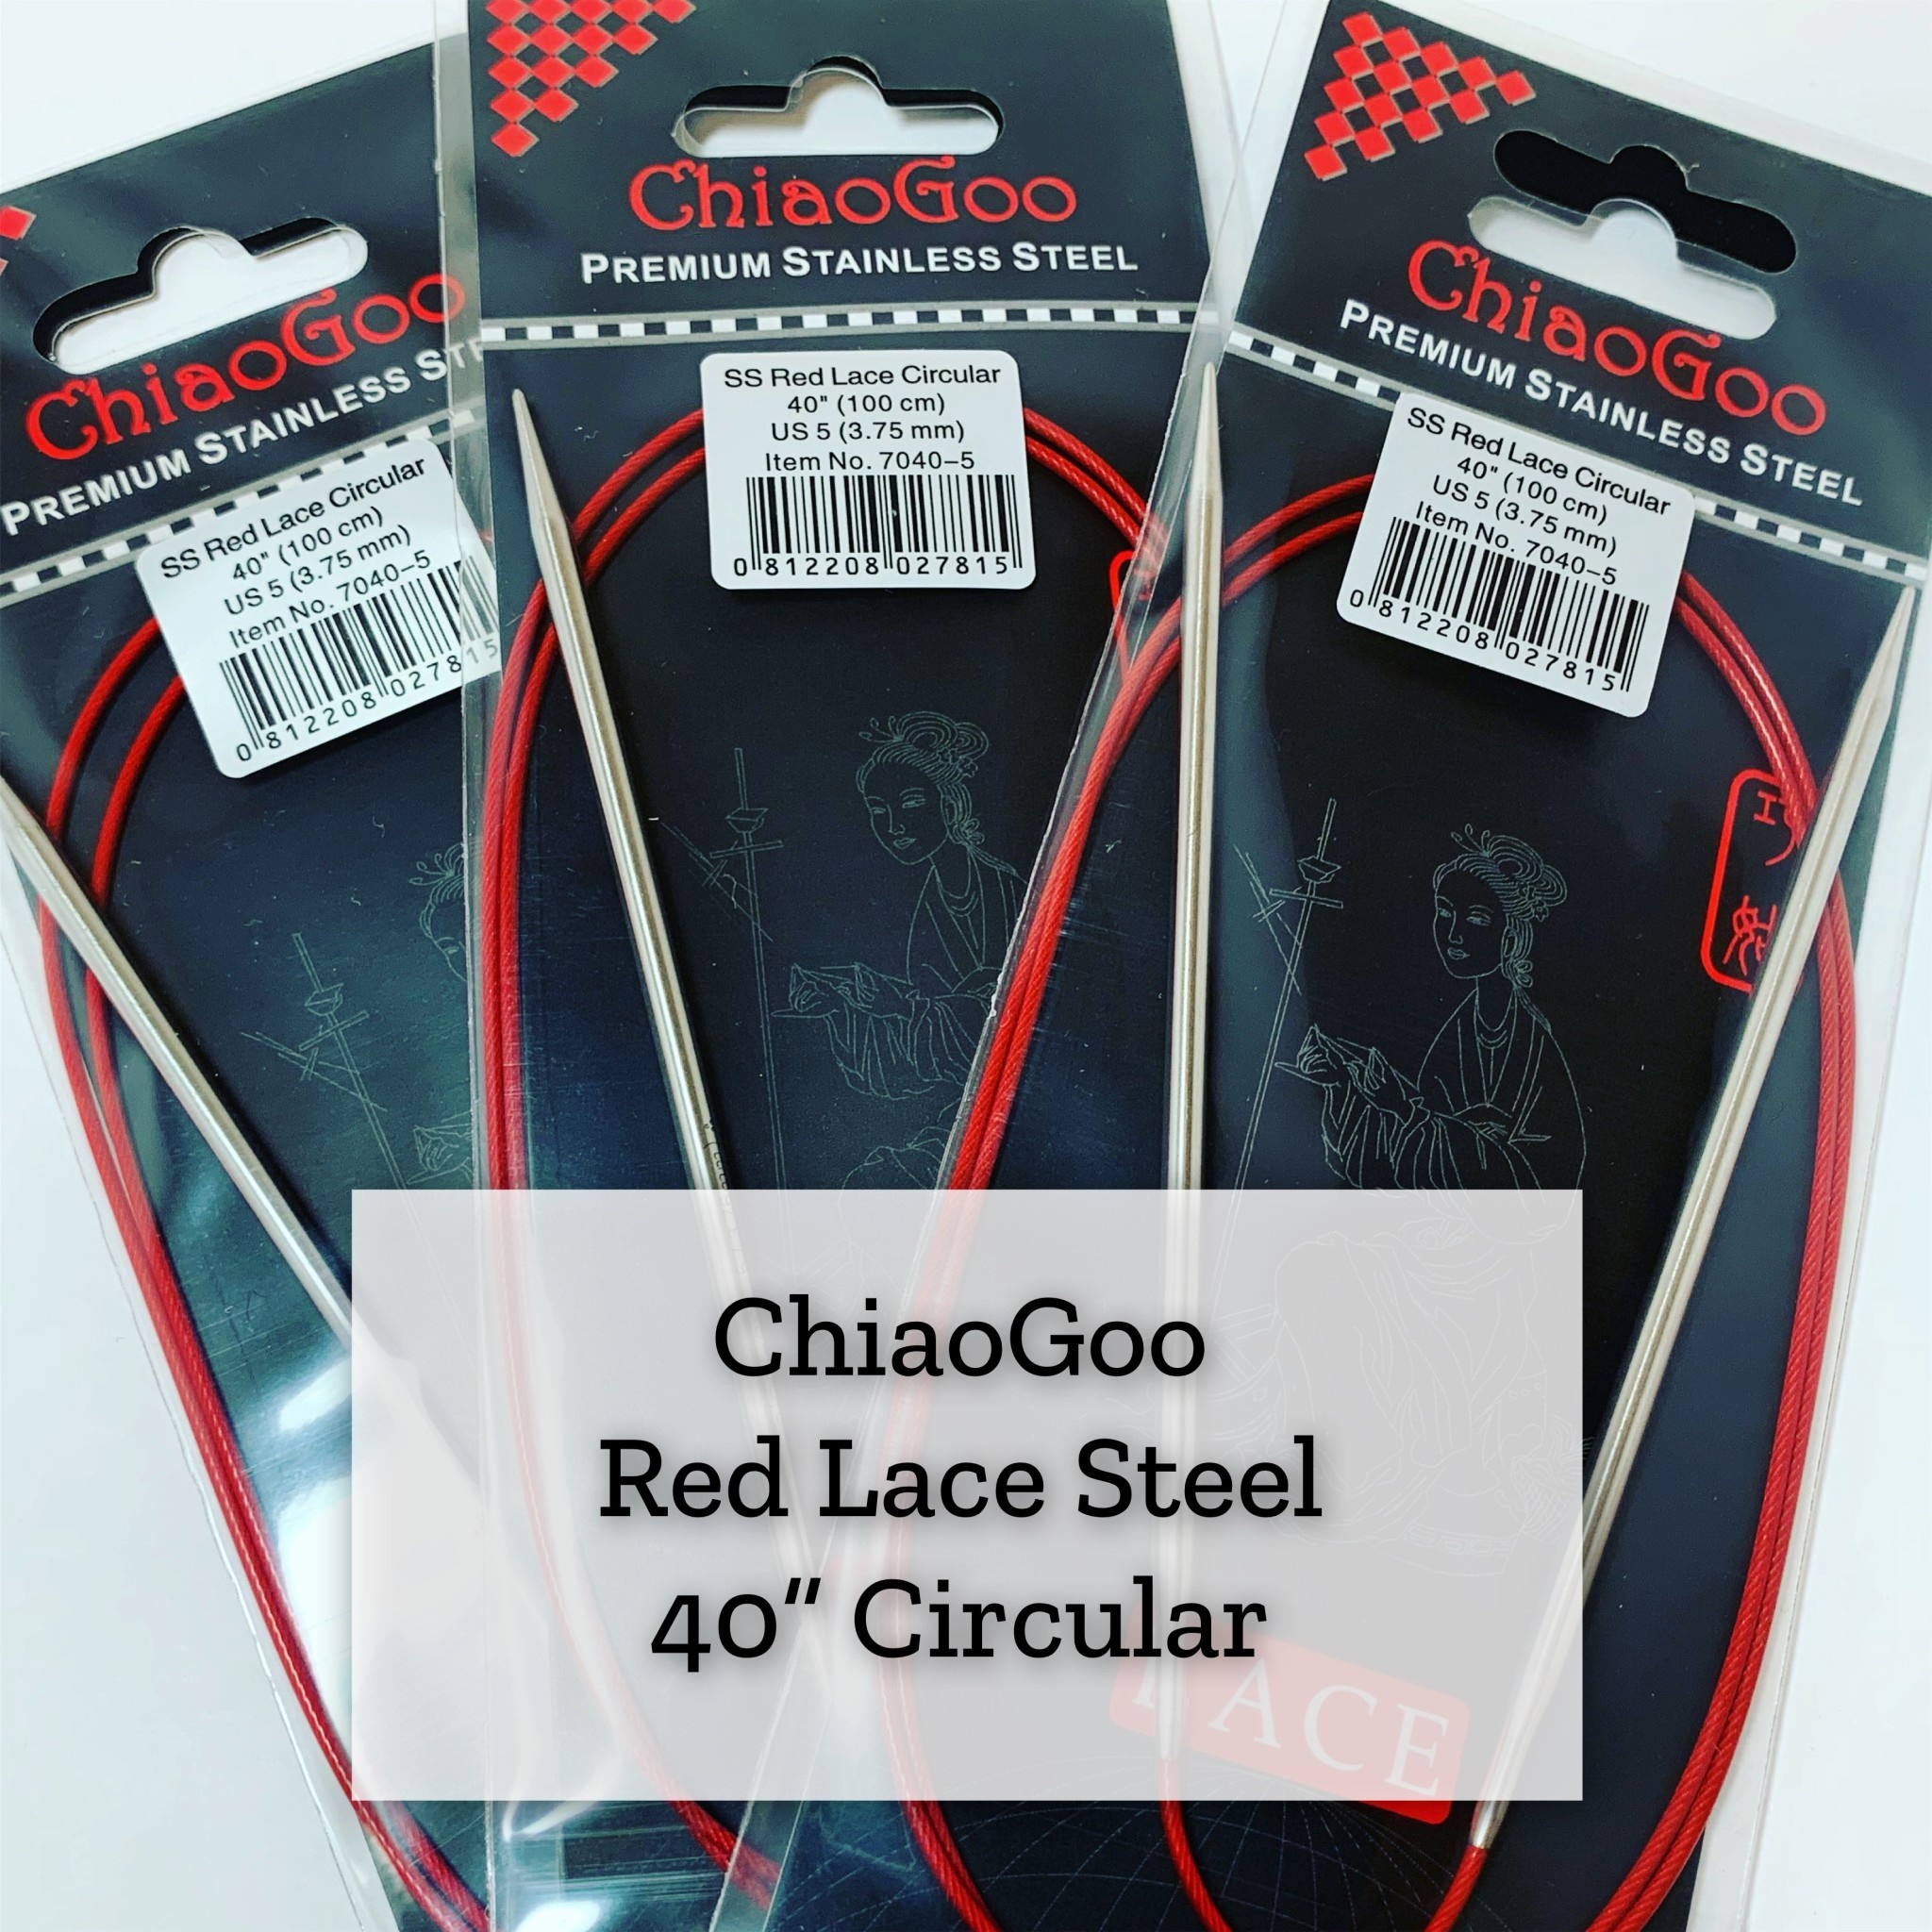 ChiaoGoo Red Lace Steel - 40" 3.25 mm